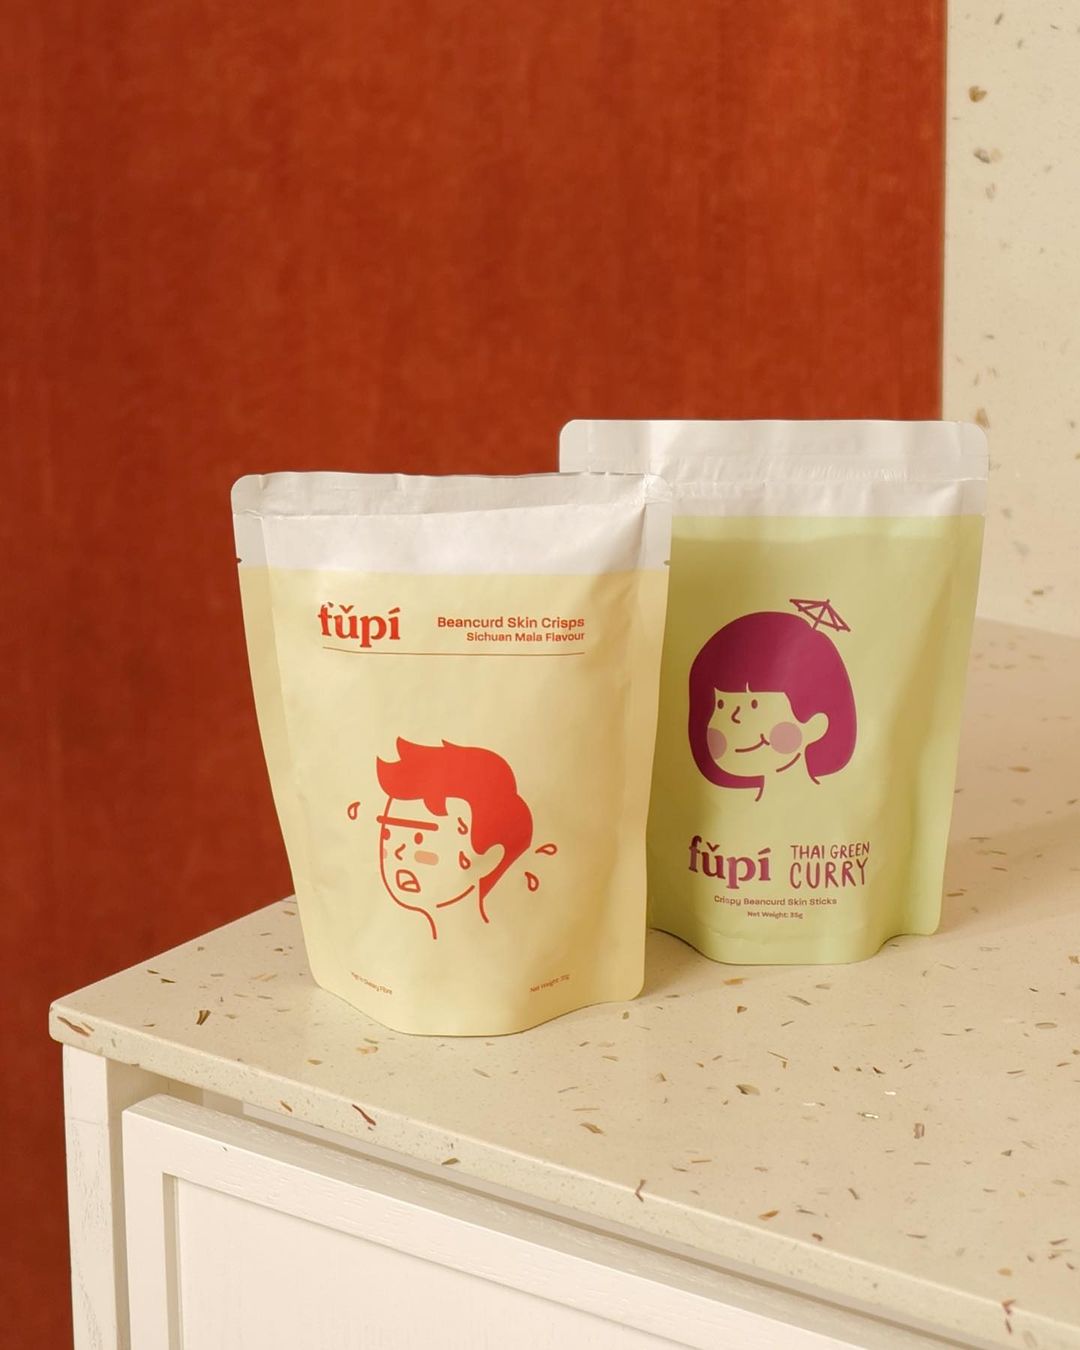 singaporean snack brands-fupi packets